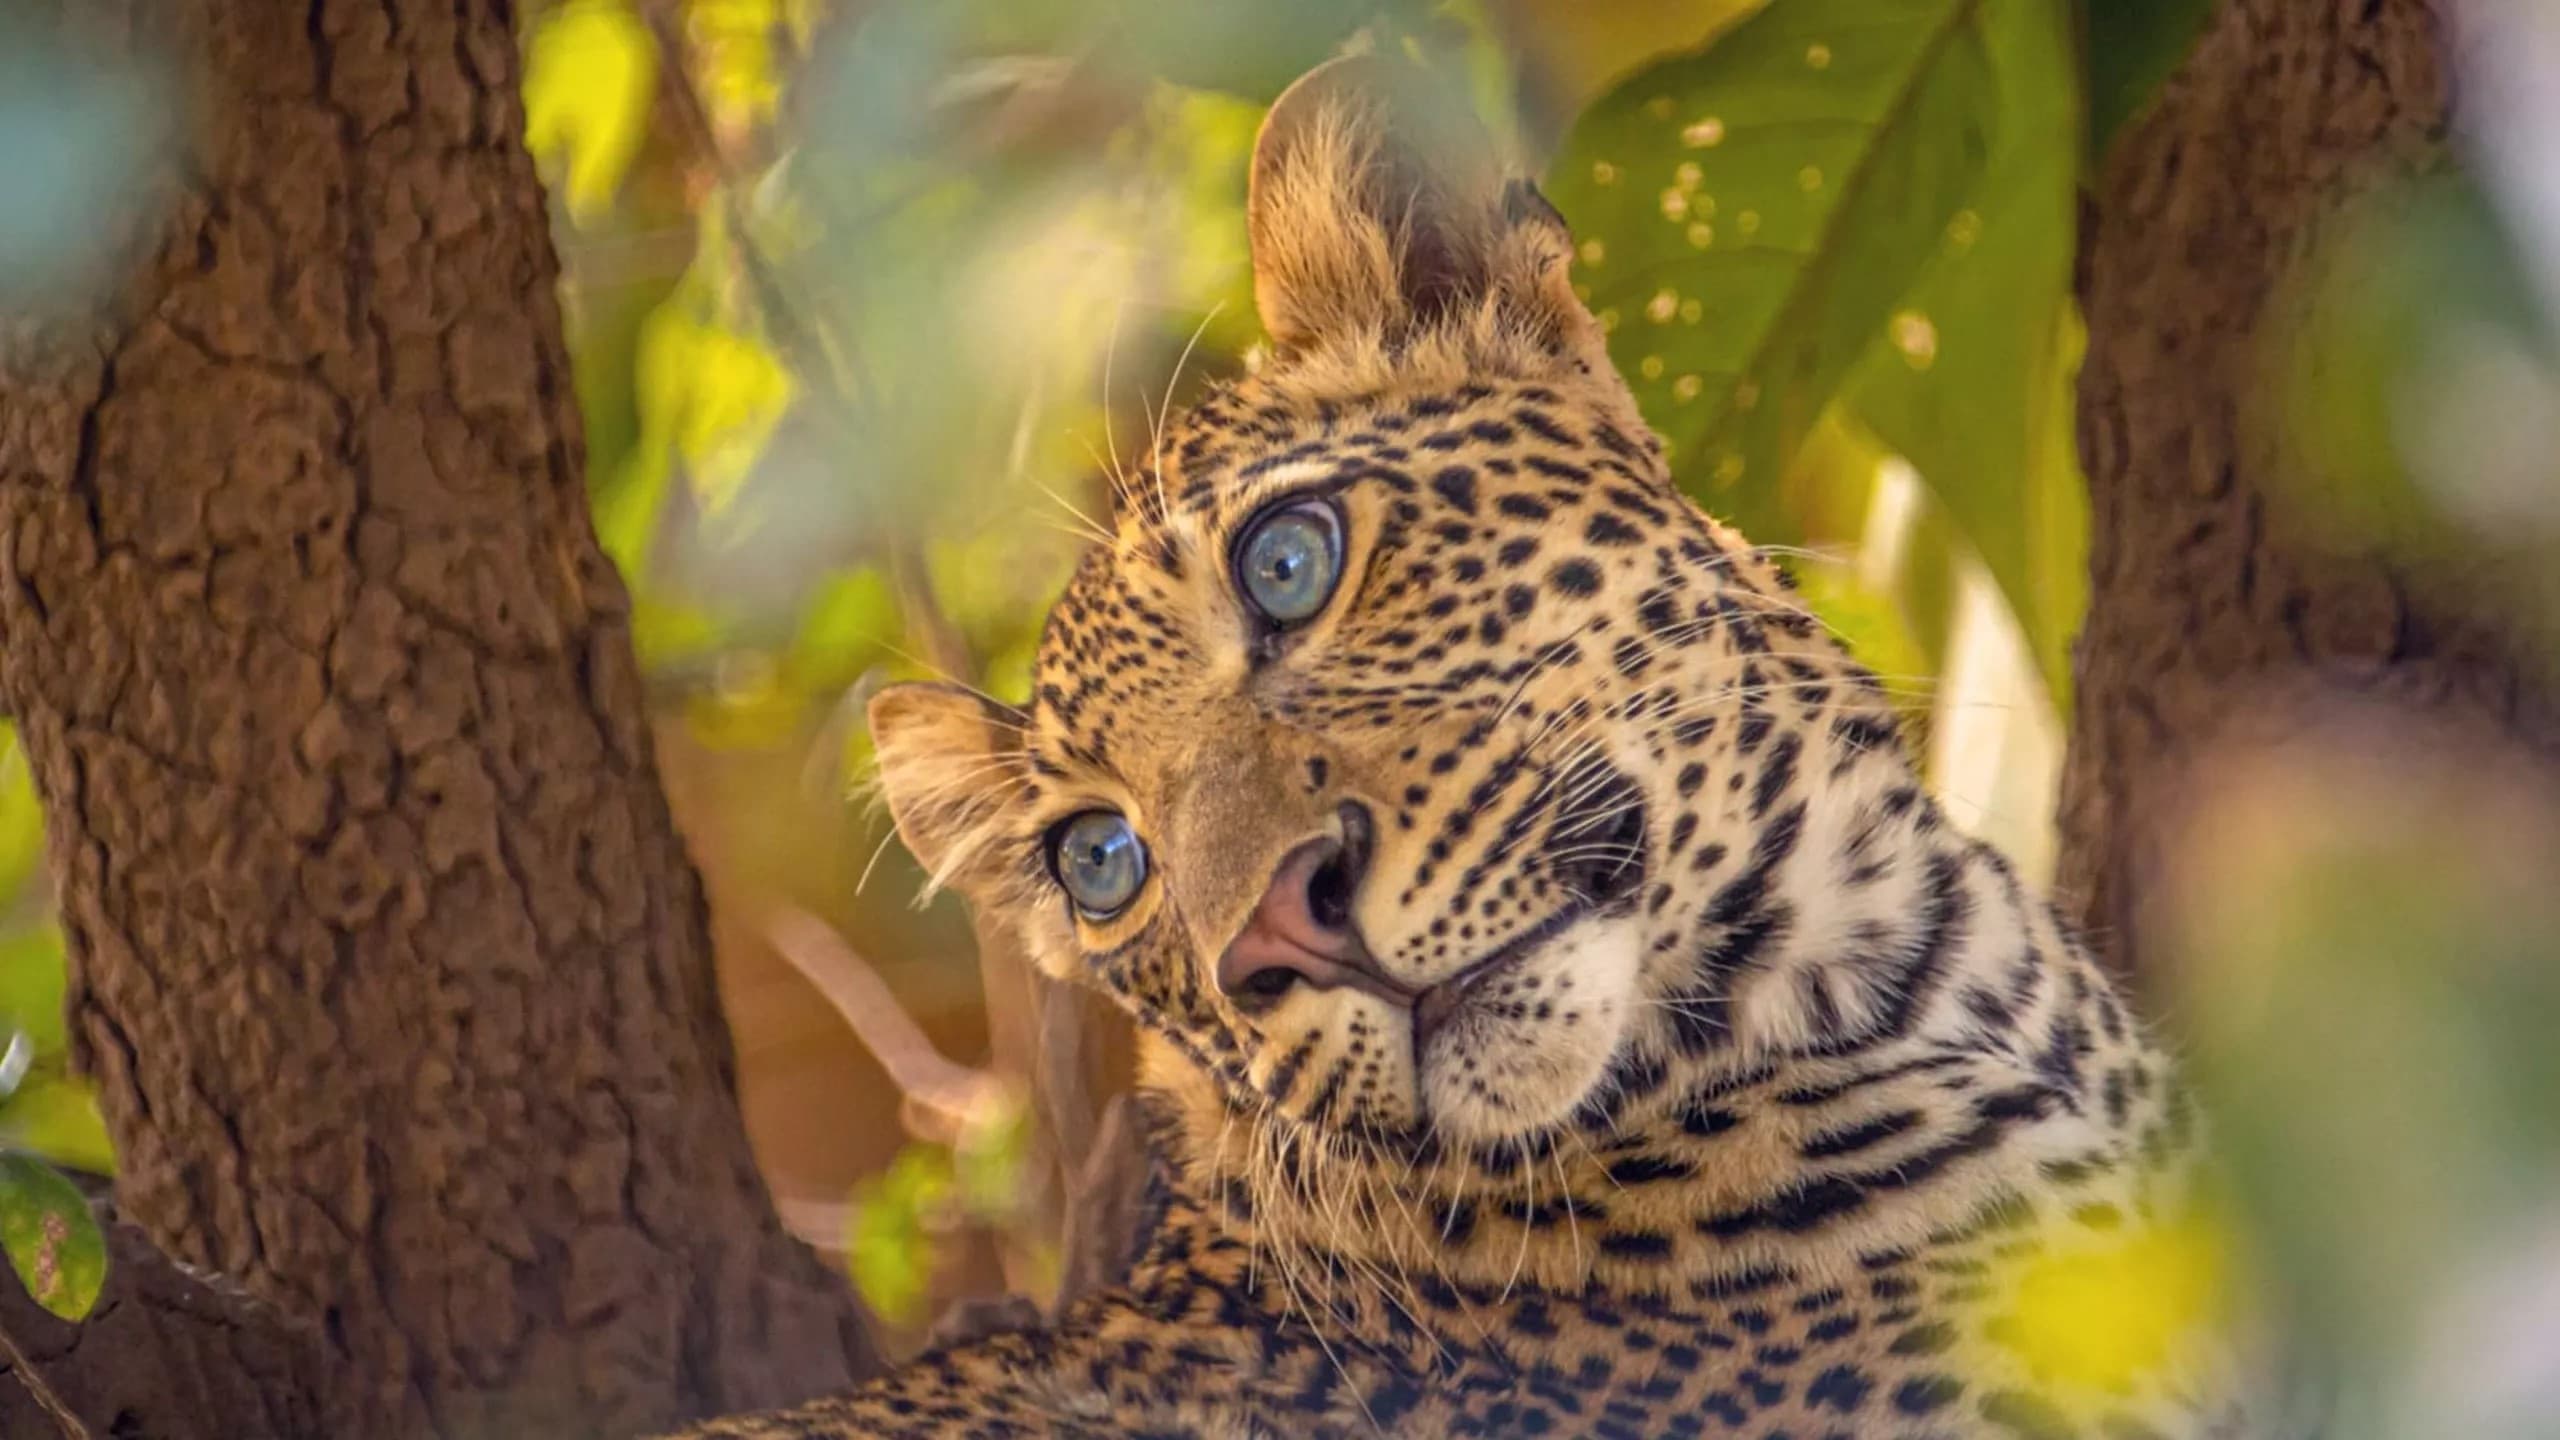 Olimba, Königin der Leoparden (2020)